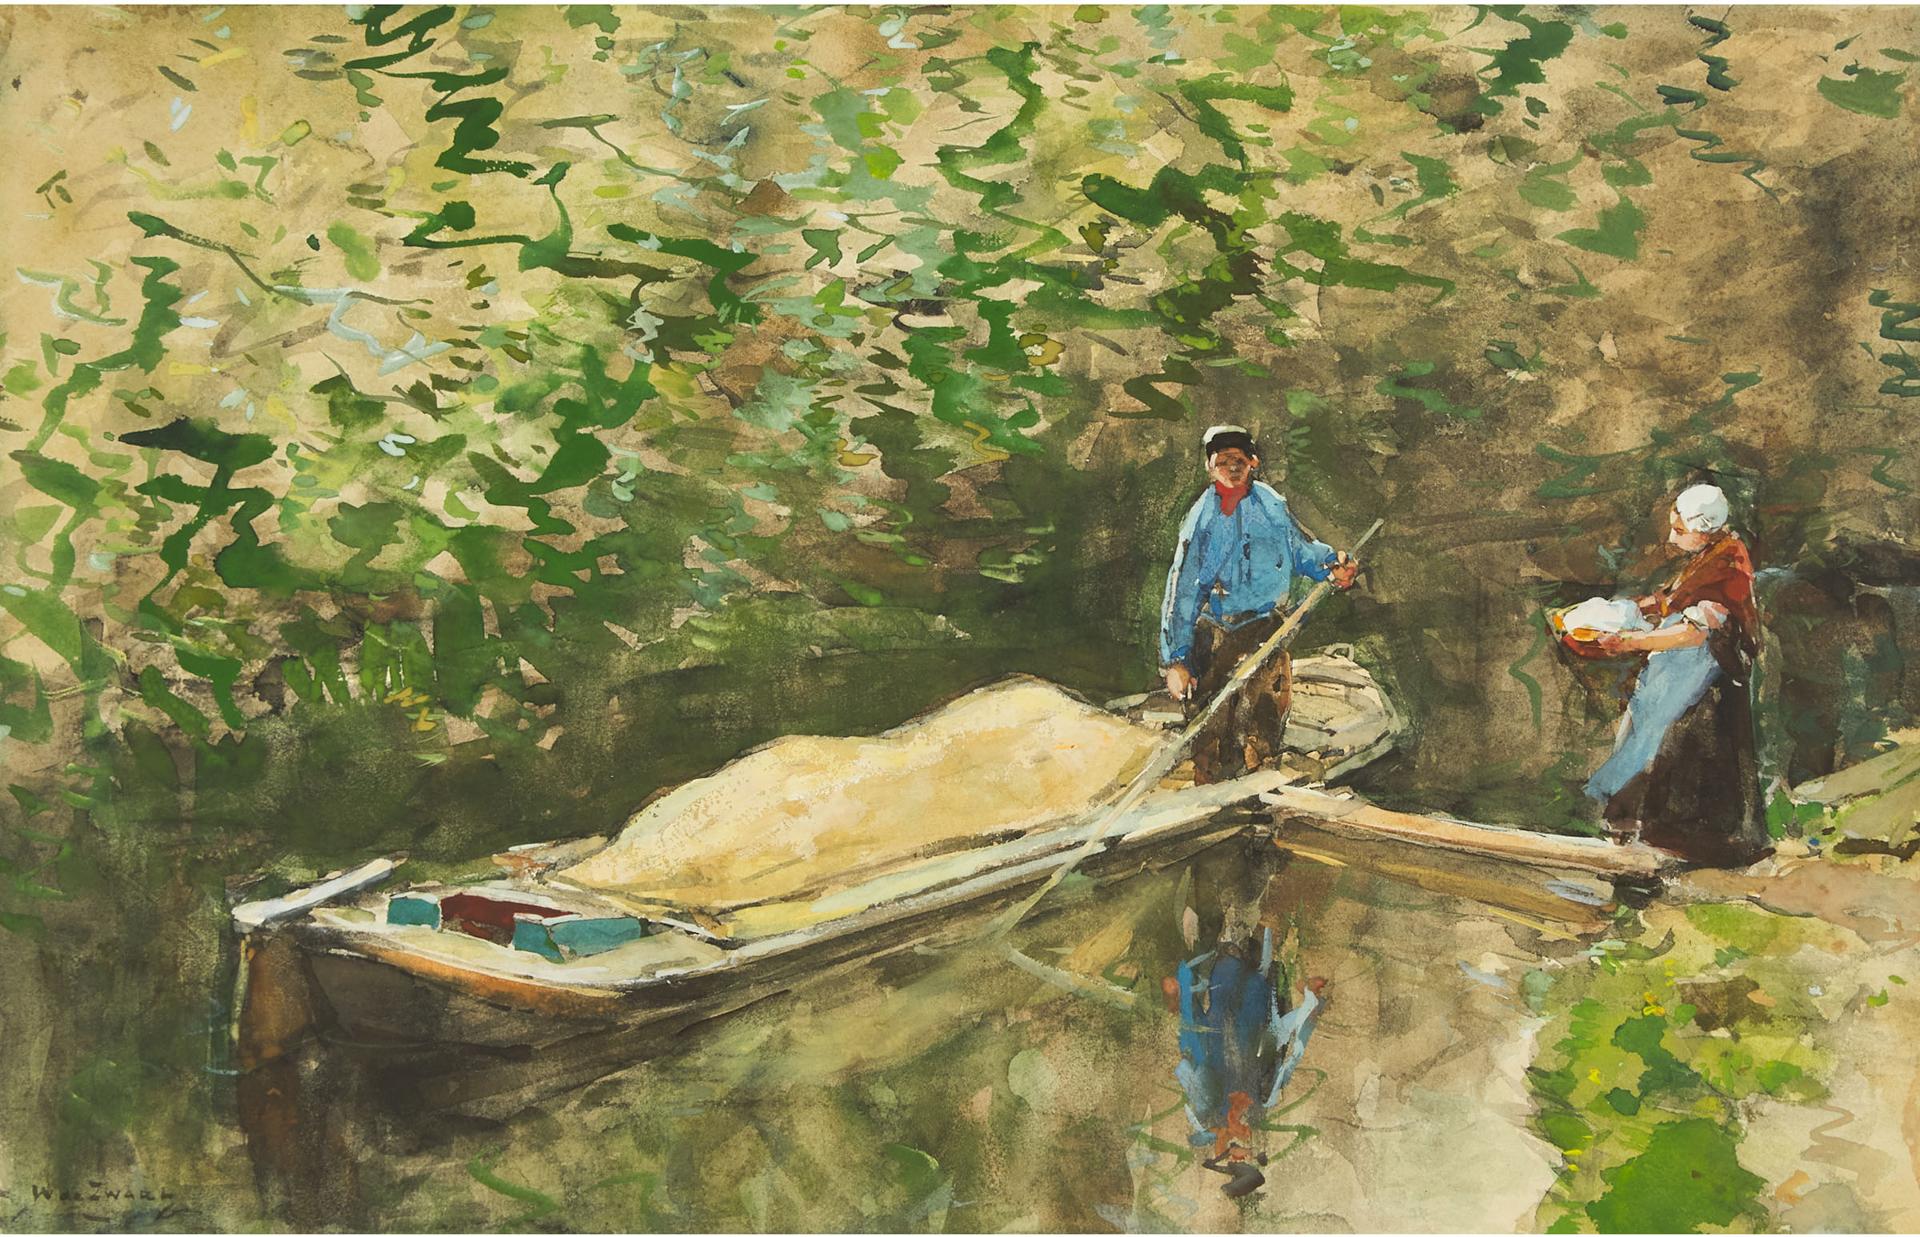 Willem de Zwart - Woman Carrying Items Out To A Boatman, Circa 1900-1905